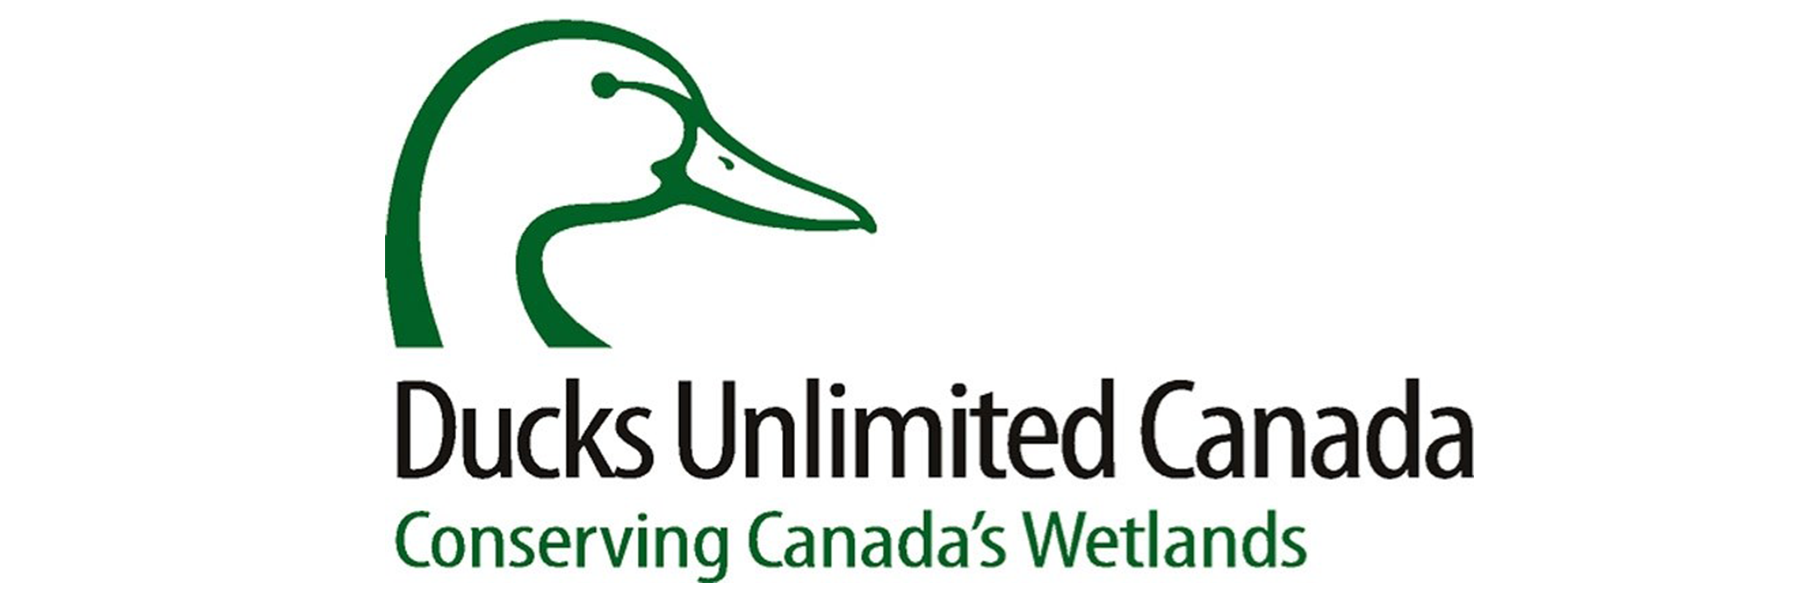 ducks unlimited logo png